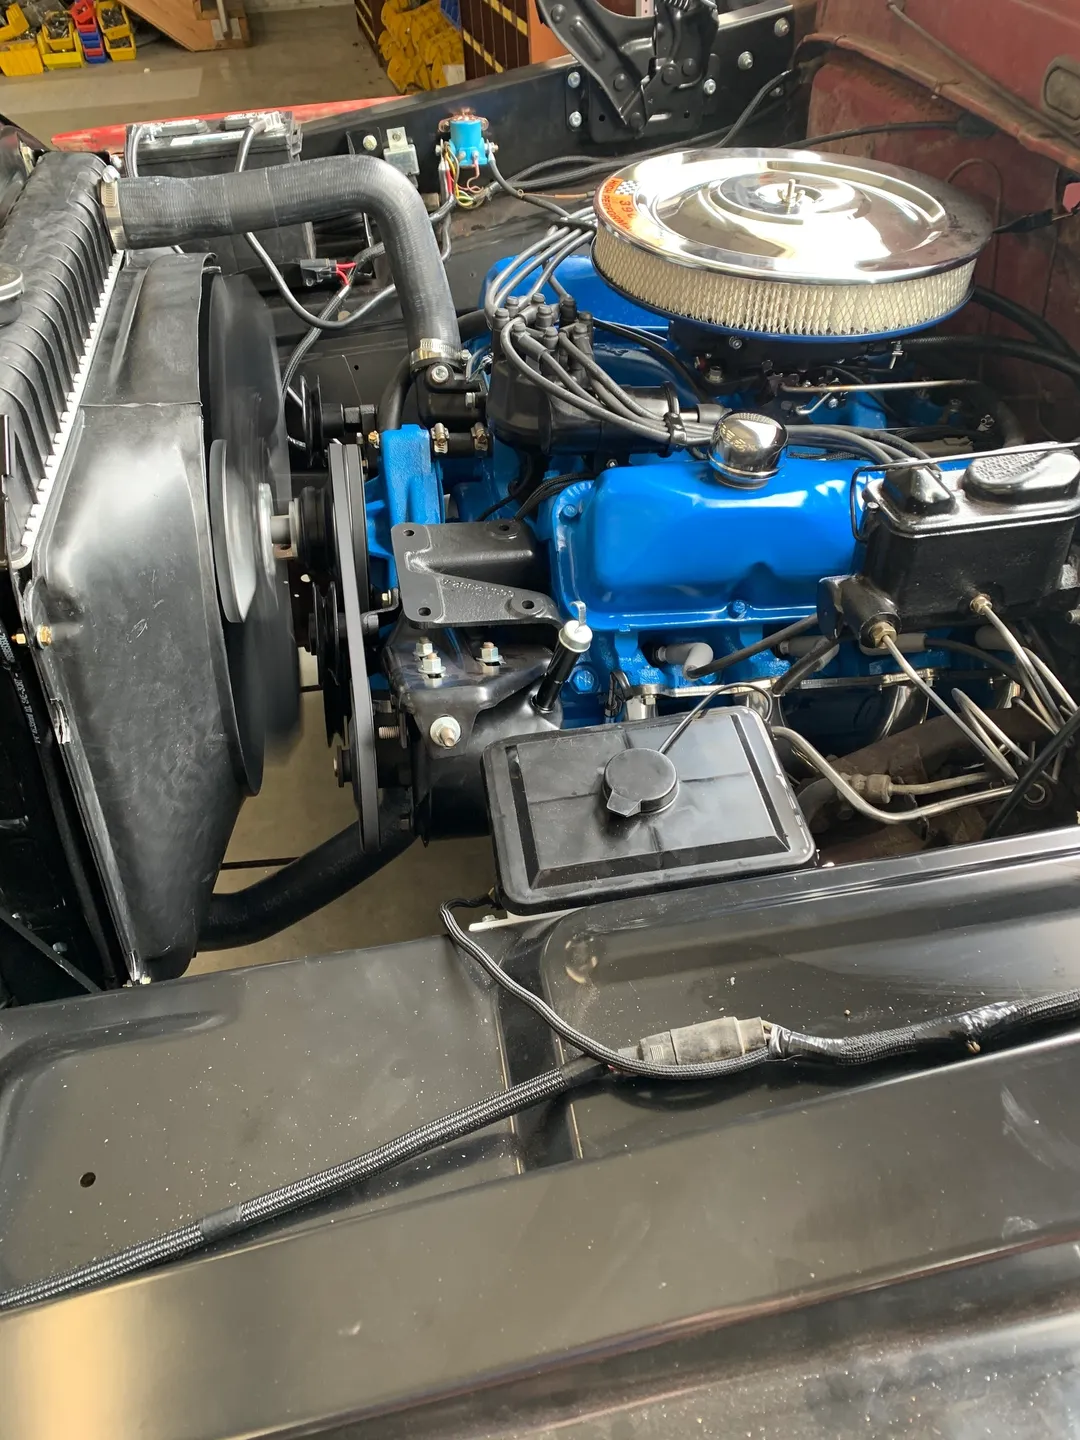 The car engine in the car bonet, side